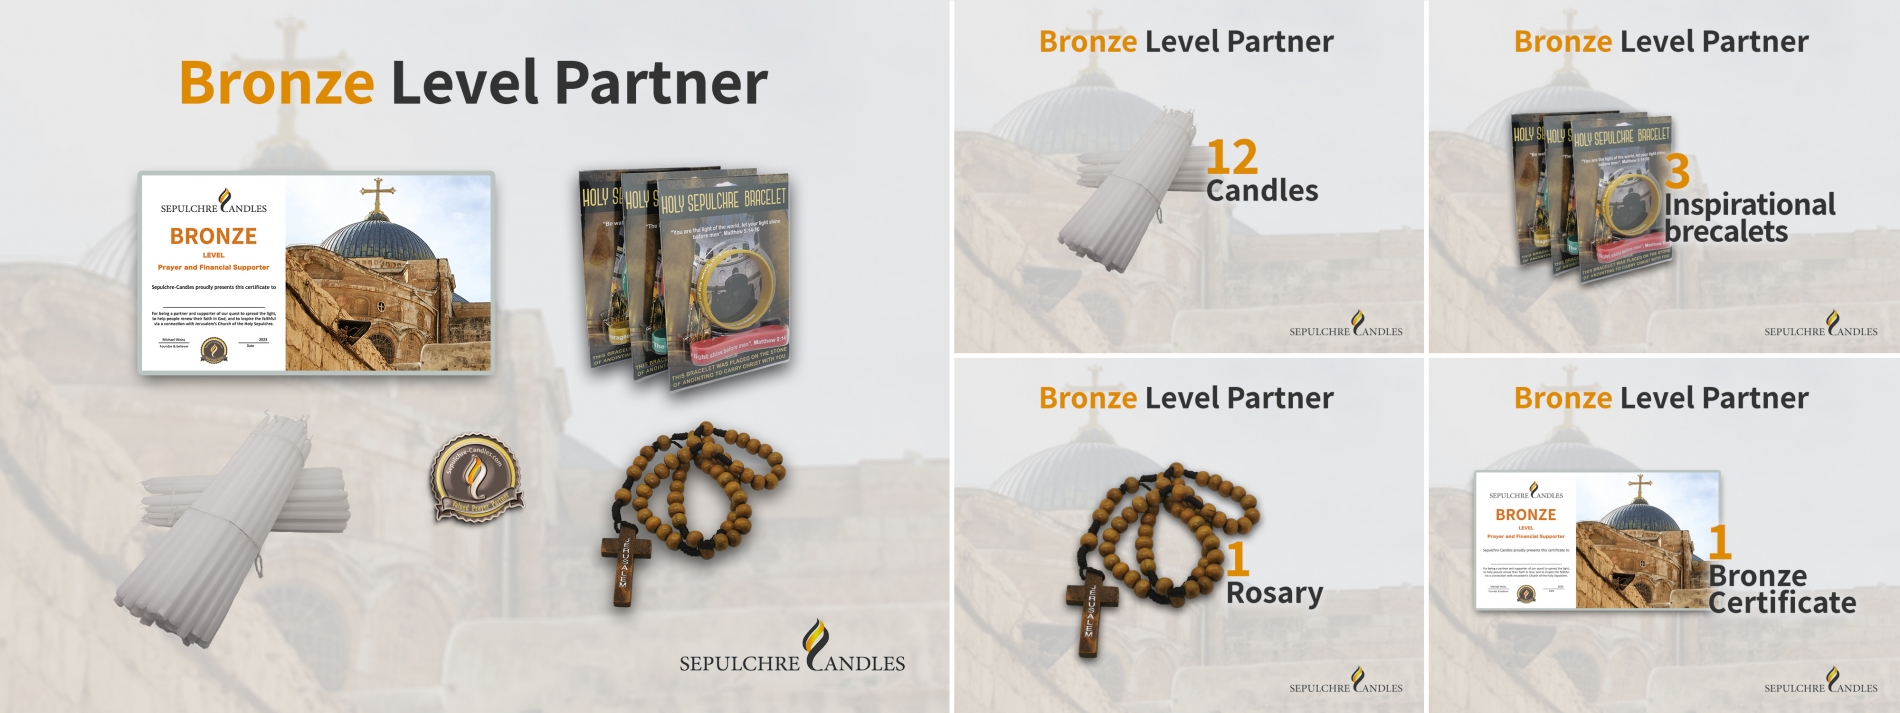 Bronze Level Partner